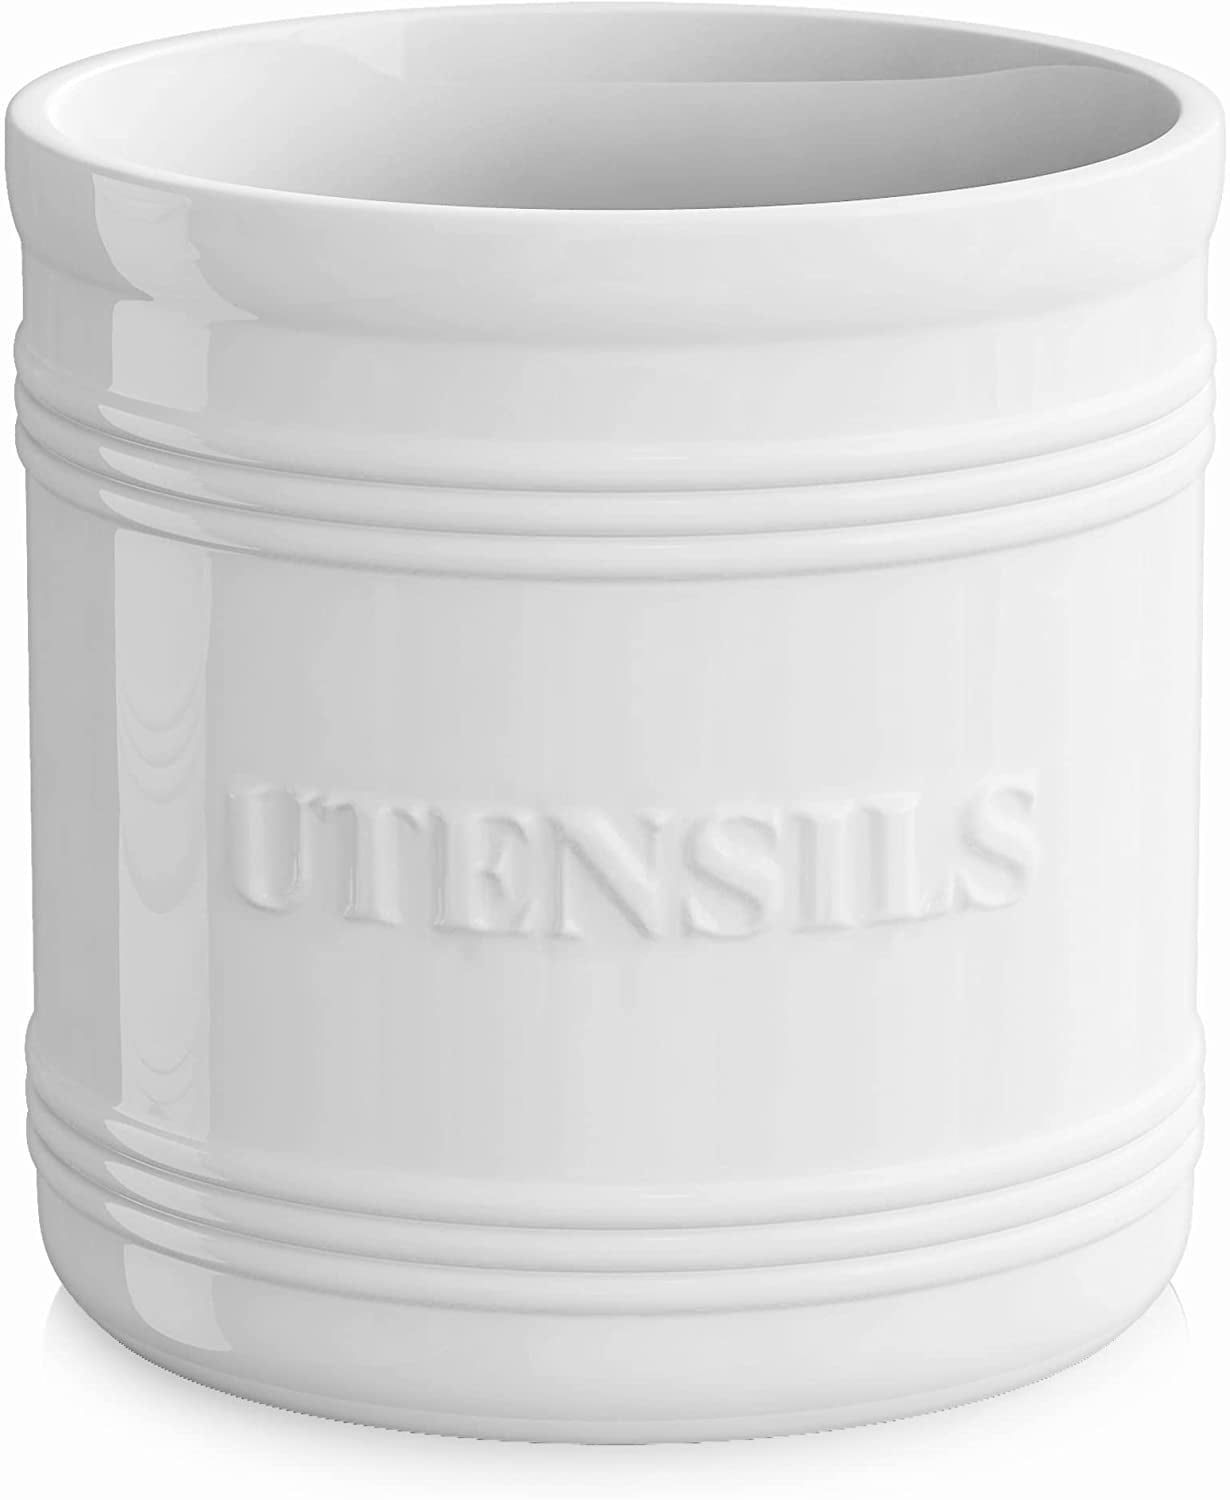 White Porcelain Utensil Crock/Holder Large Size for Kitchen Storage 